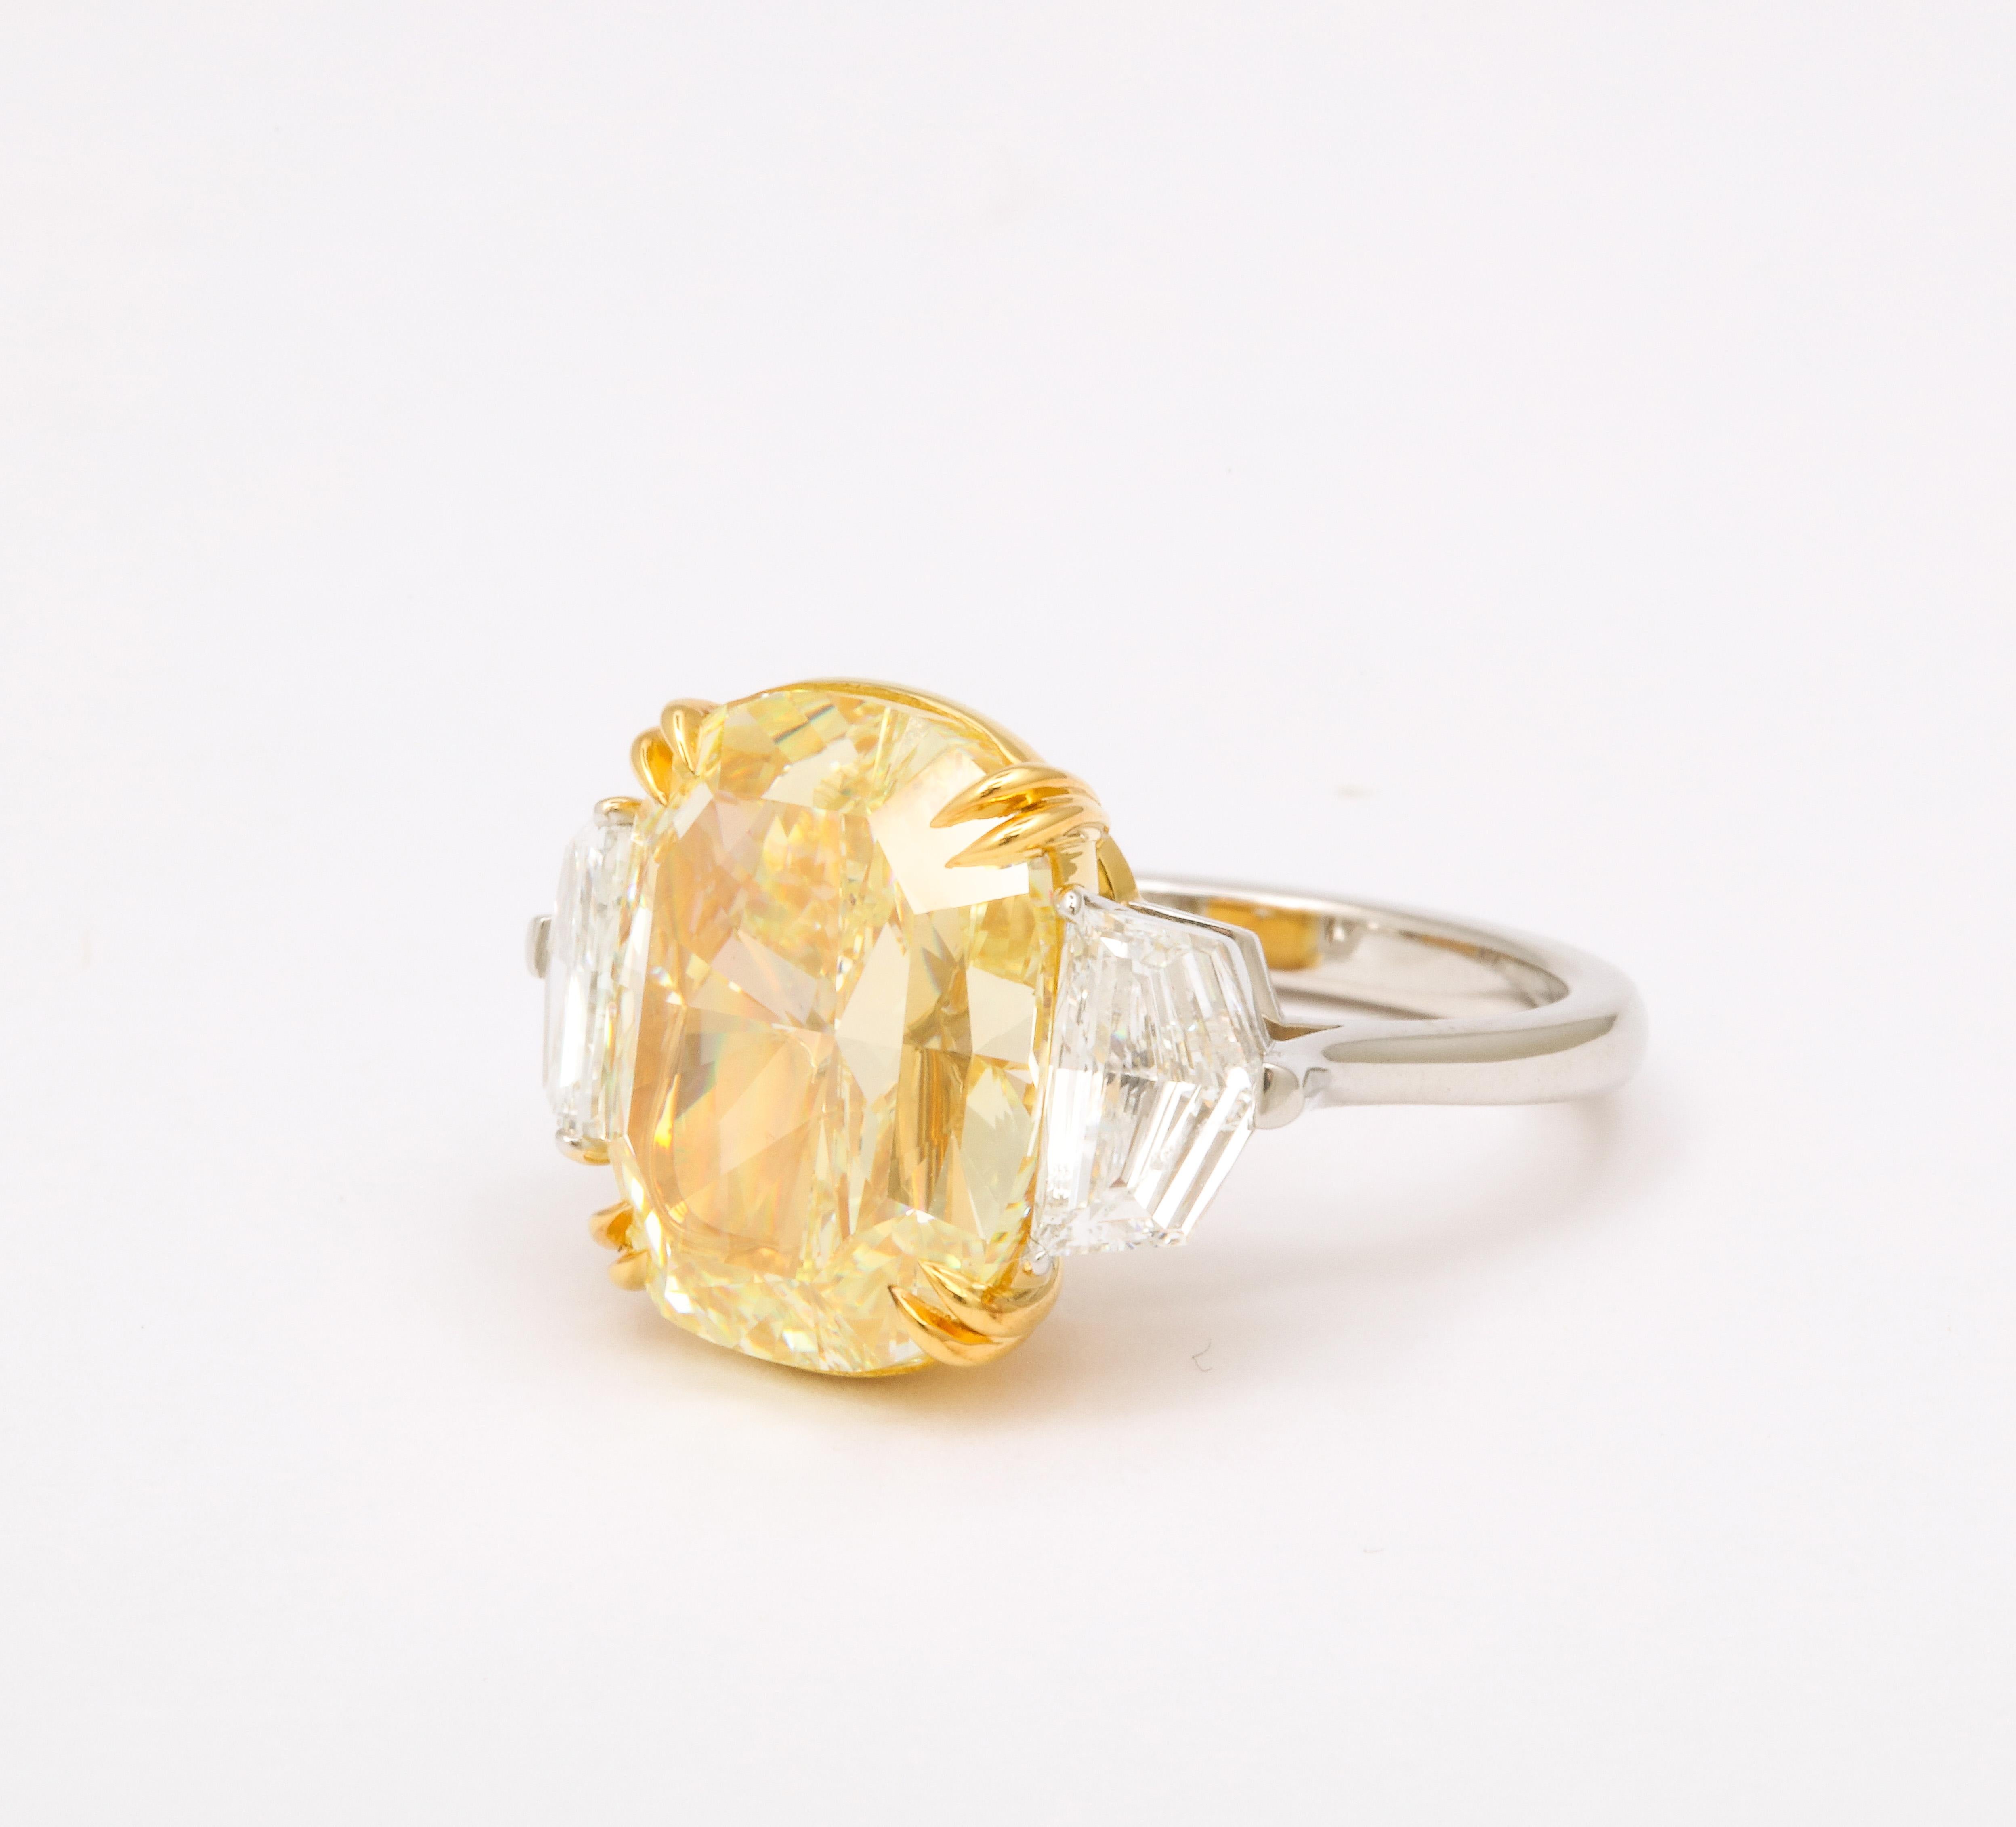 10 Carat Fancy Yellow Diamond Ring 1